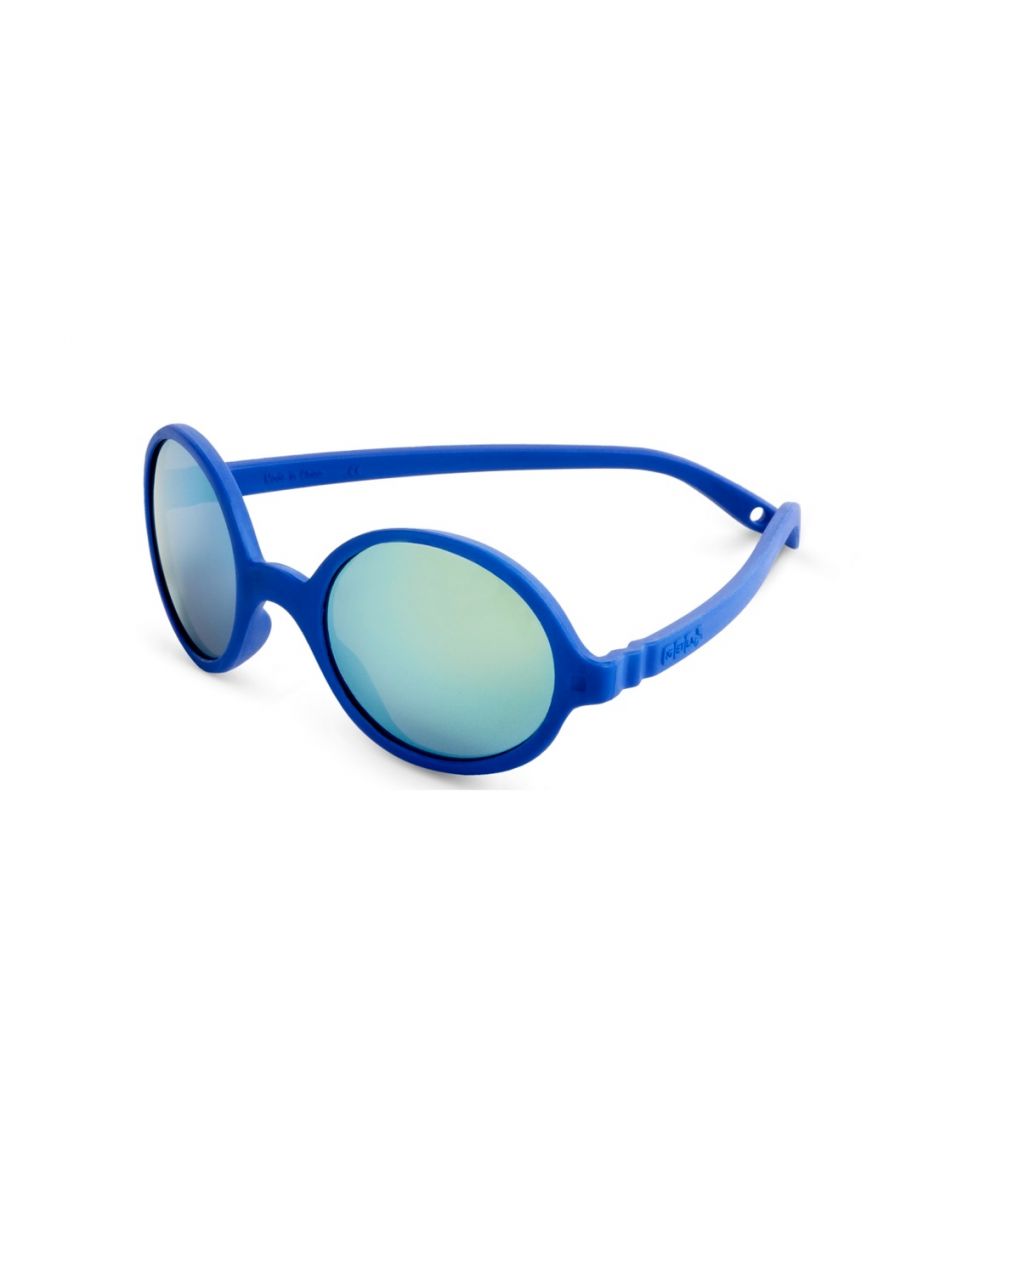 Kietla γυαλιά ηλίου 1-2 ετών rozz reflex blue - kietla